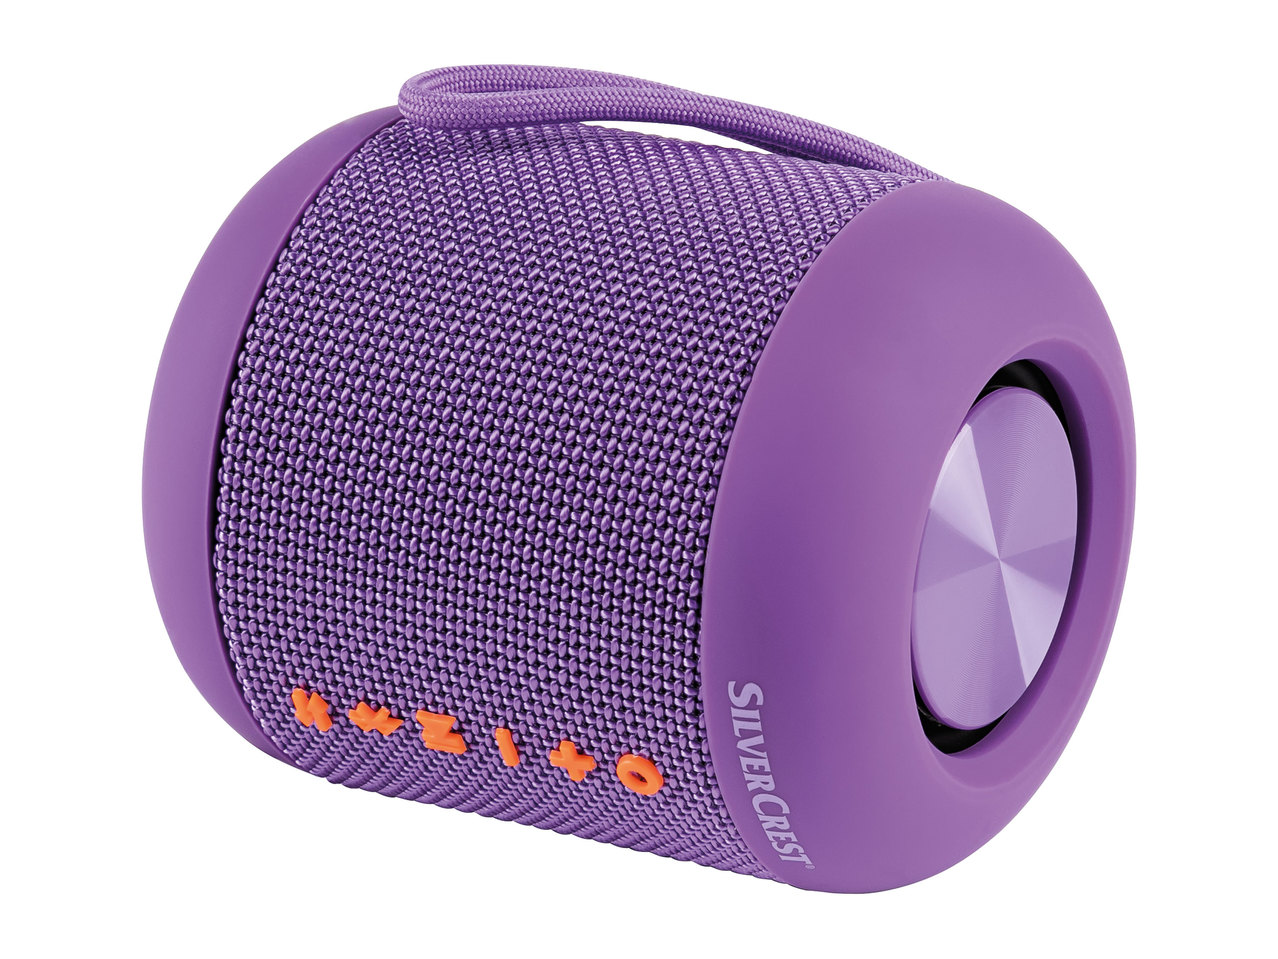 Silvercrest Mini Bluetooth Speaker1